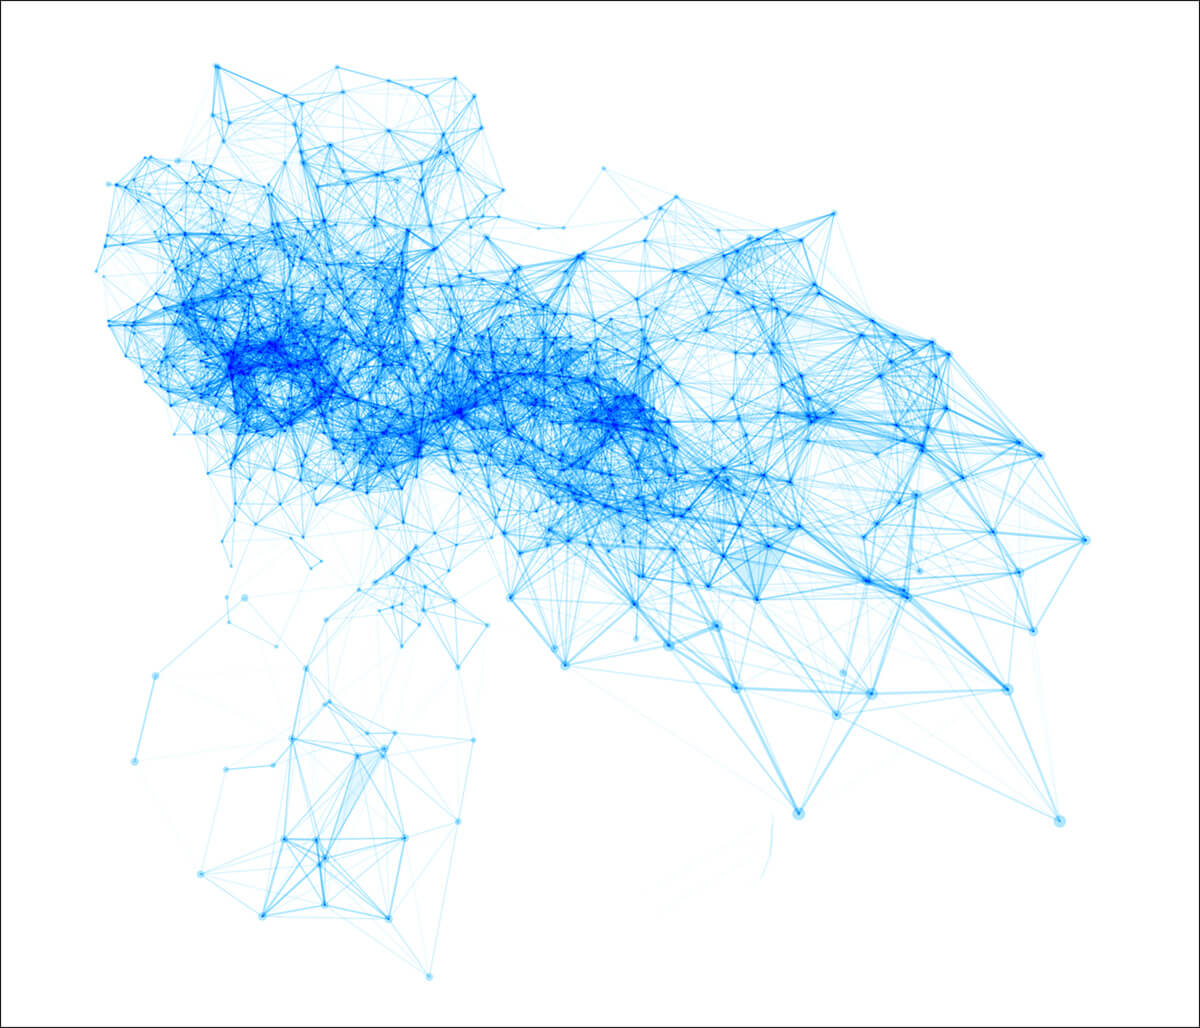 A visual representation of a network.